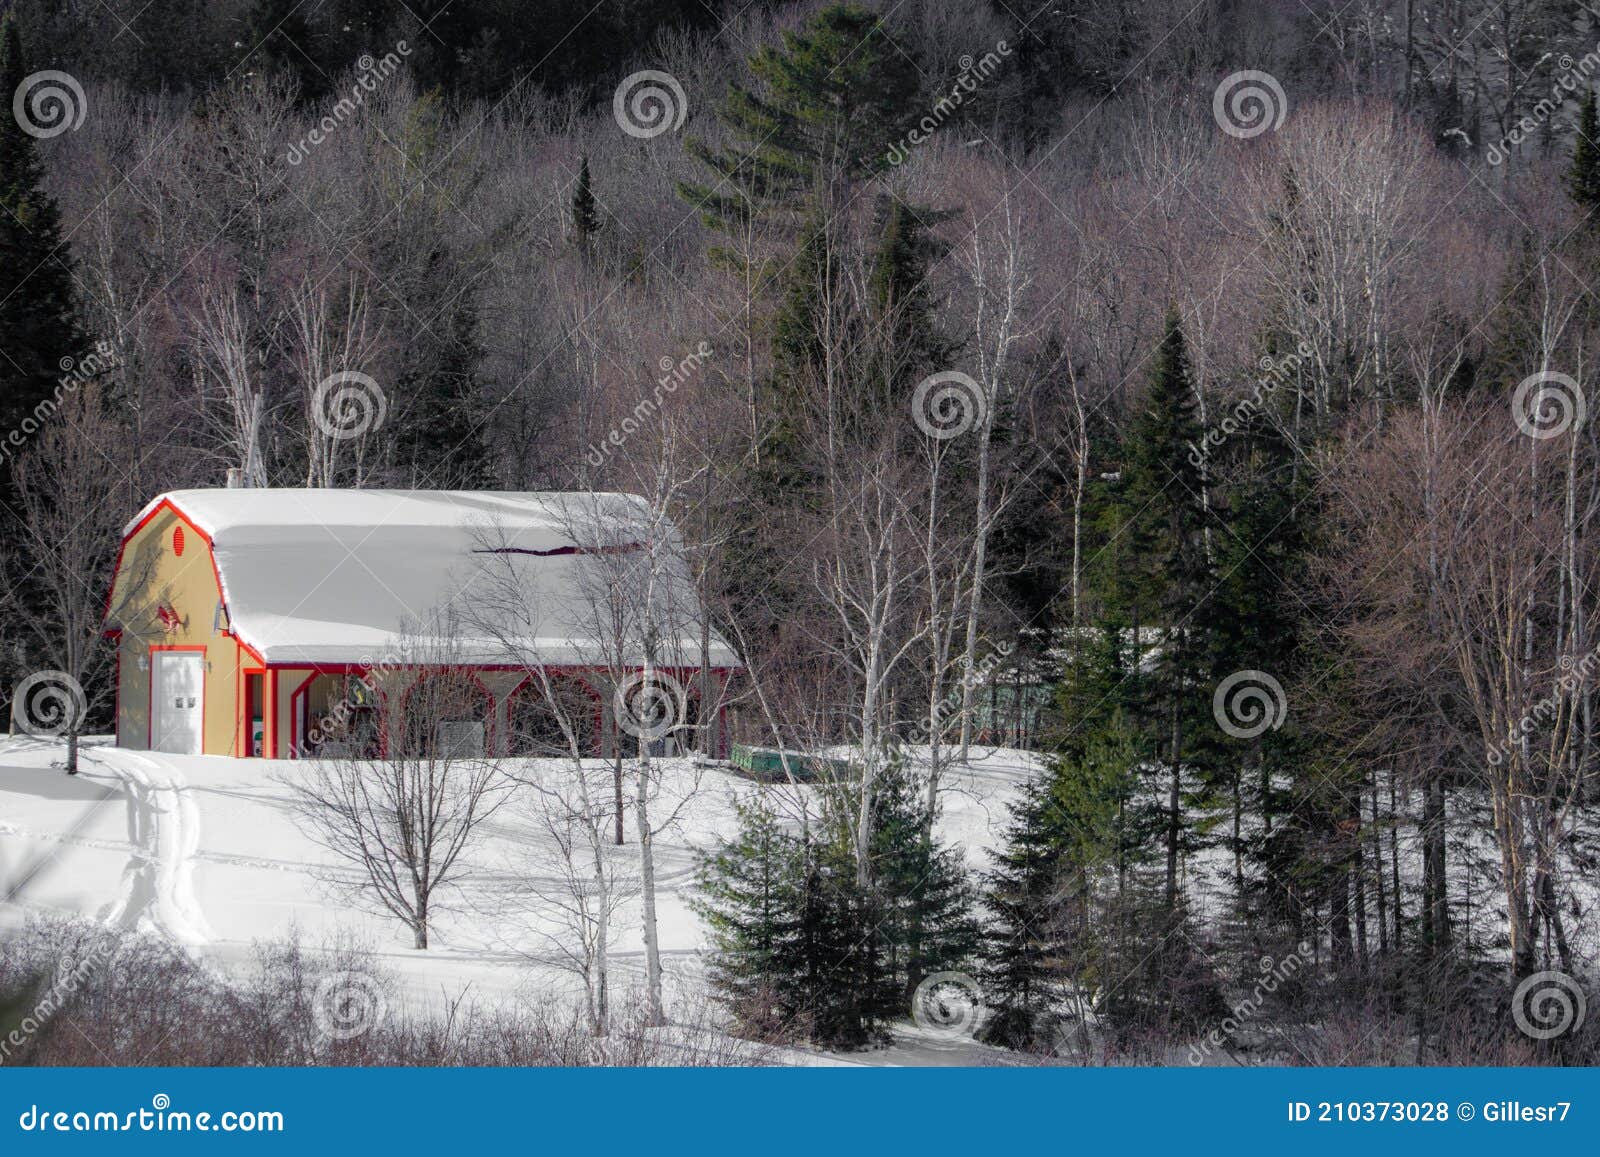 nice barn, winter landsacape on the countryside